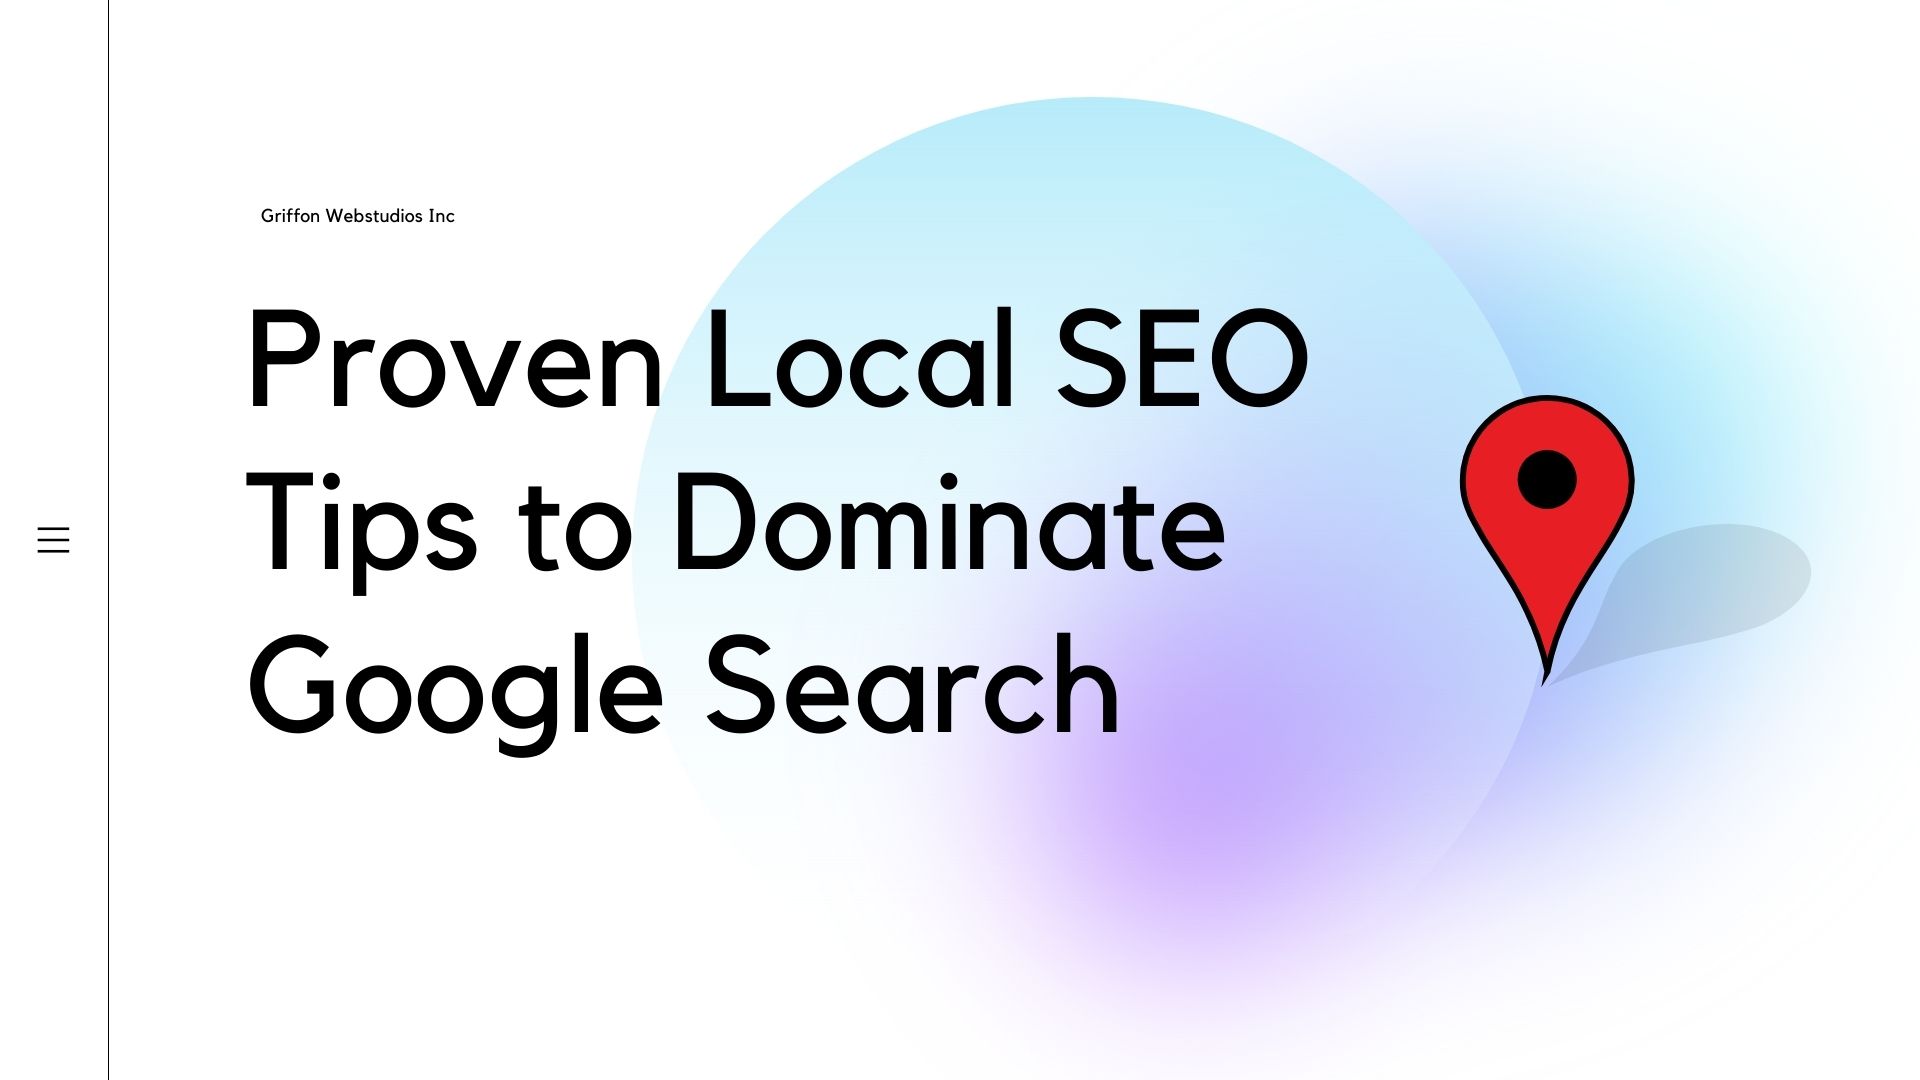 Proven Local SEO Tips to Dominate Google Search